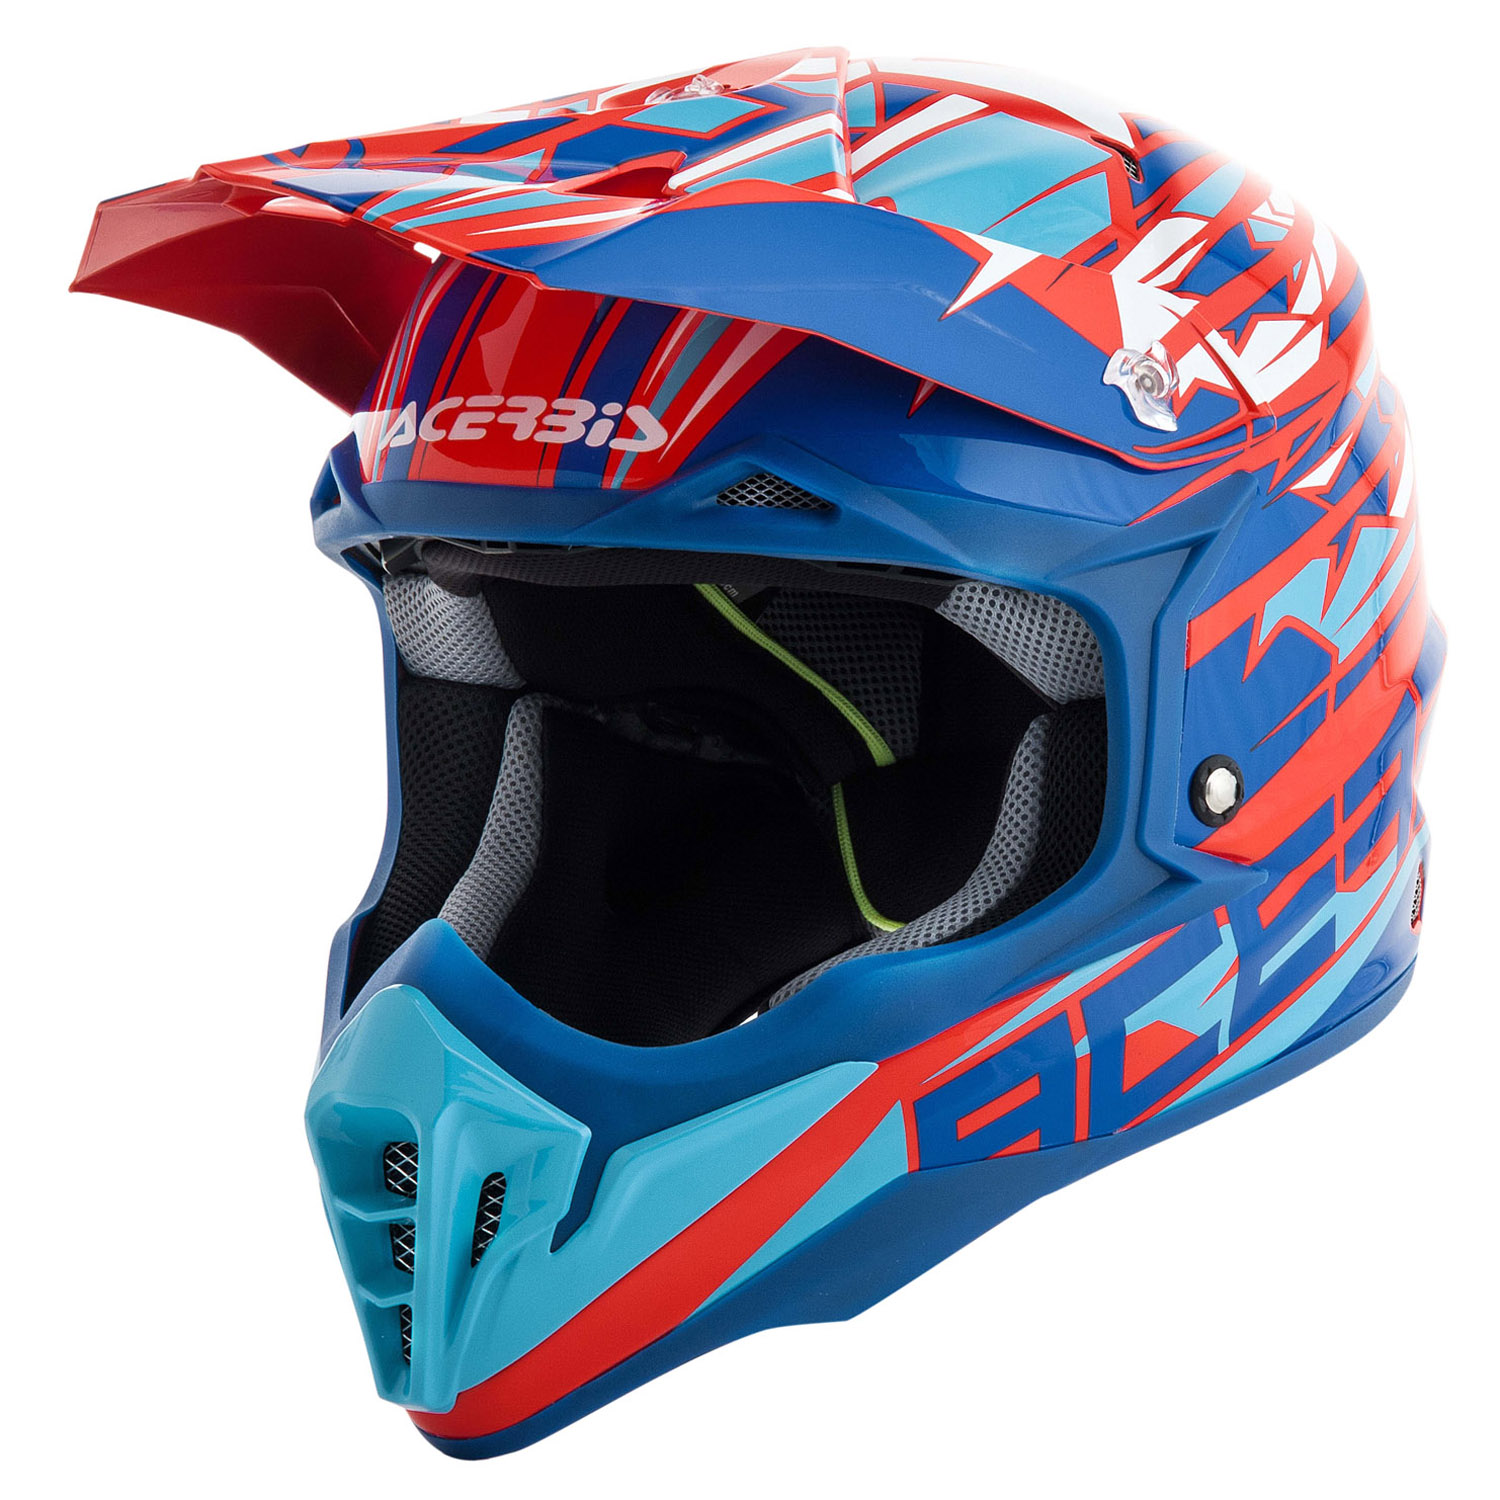 Acerbis Helmet Impact 3.0 Red/Blue